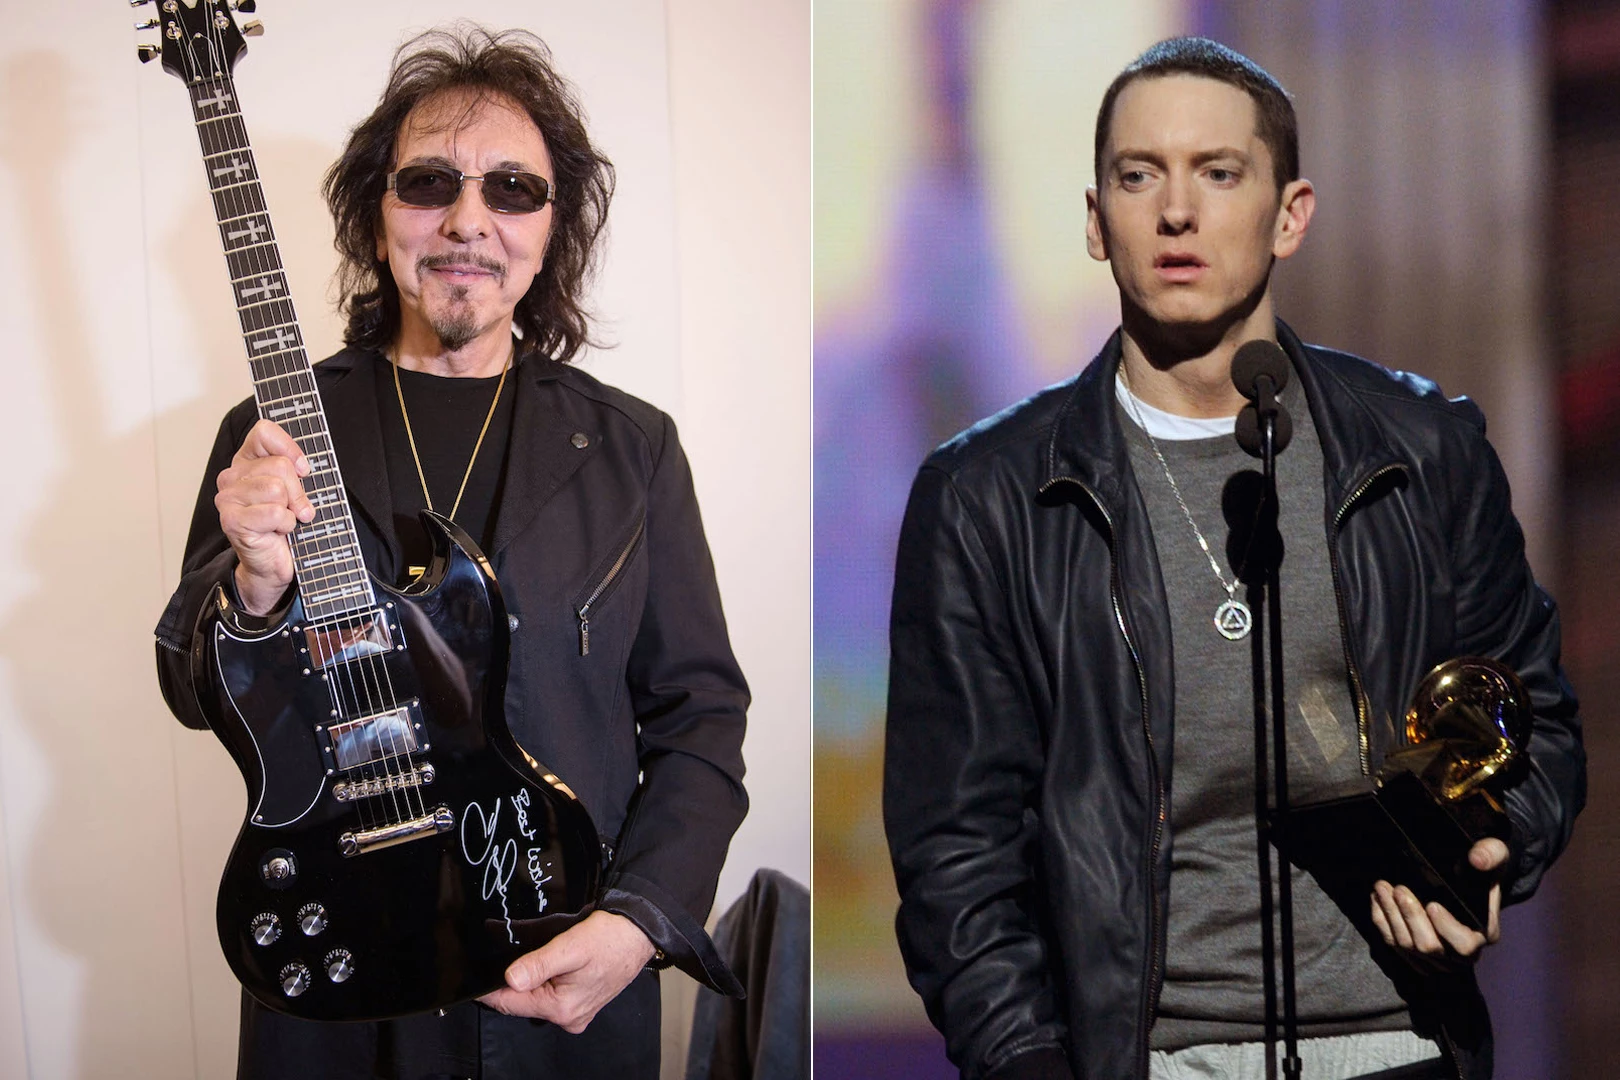 Tony Iommi Reveals Eminem Wanted to Be on 'Iommi' Solo Album